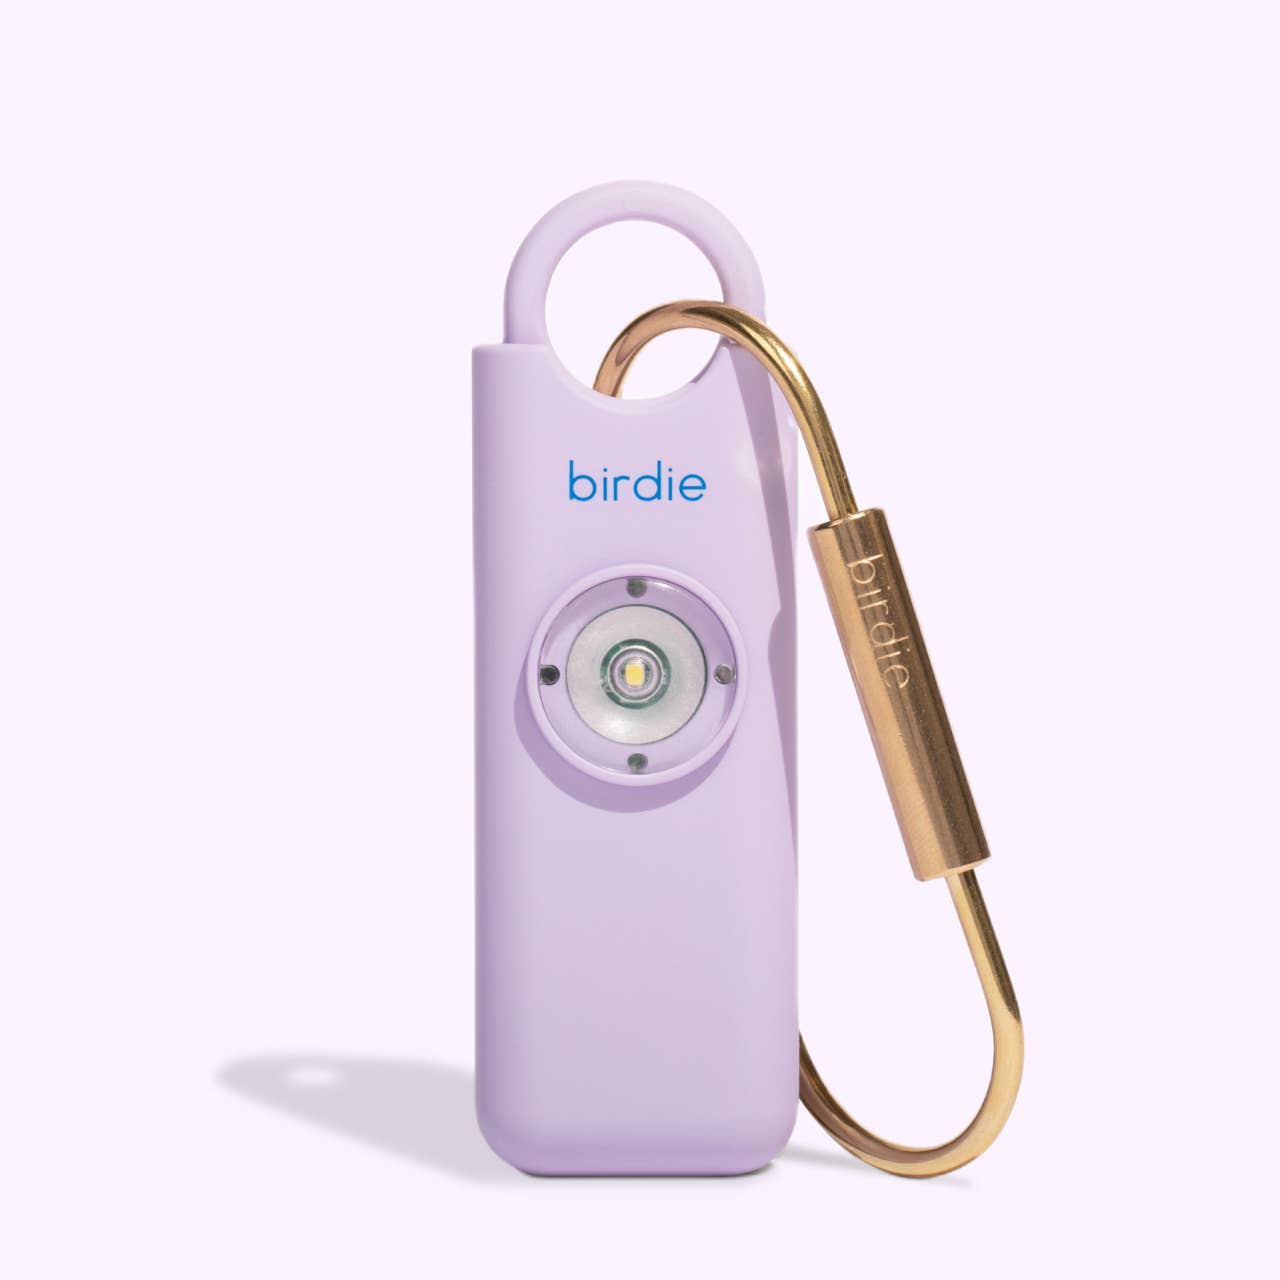 She's Birdie Personal Safety Alarm: Single / Coconut